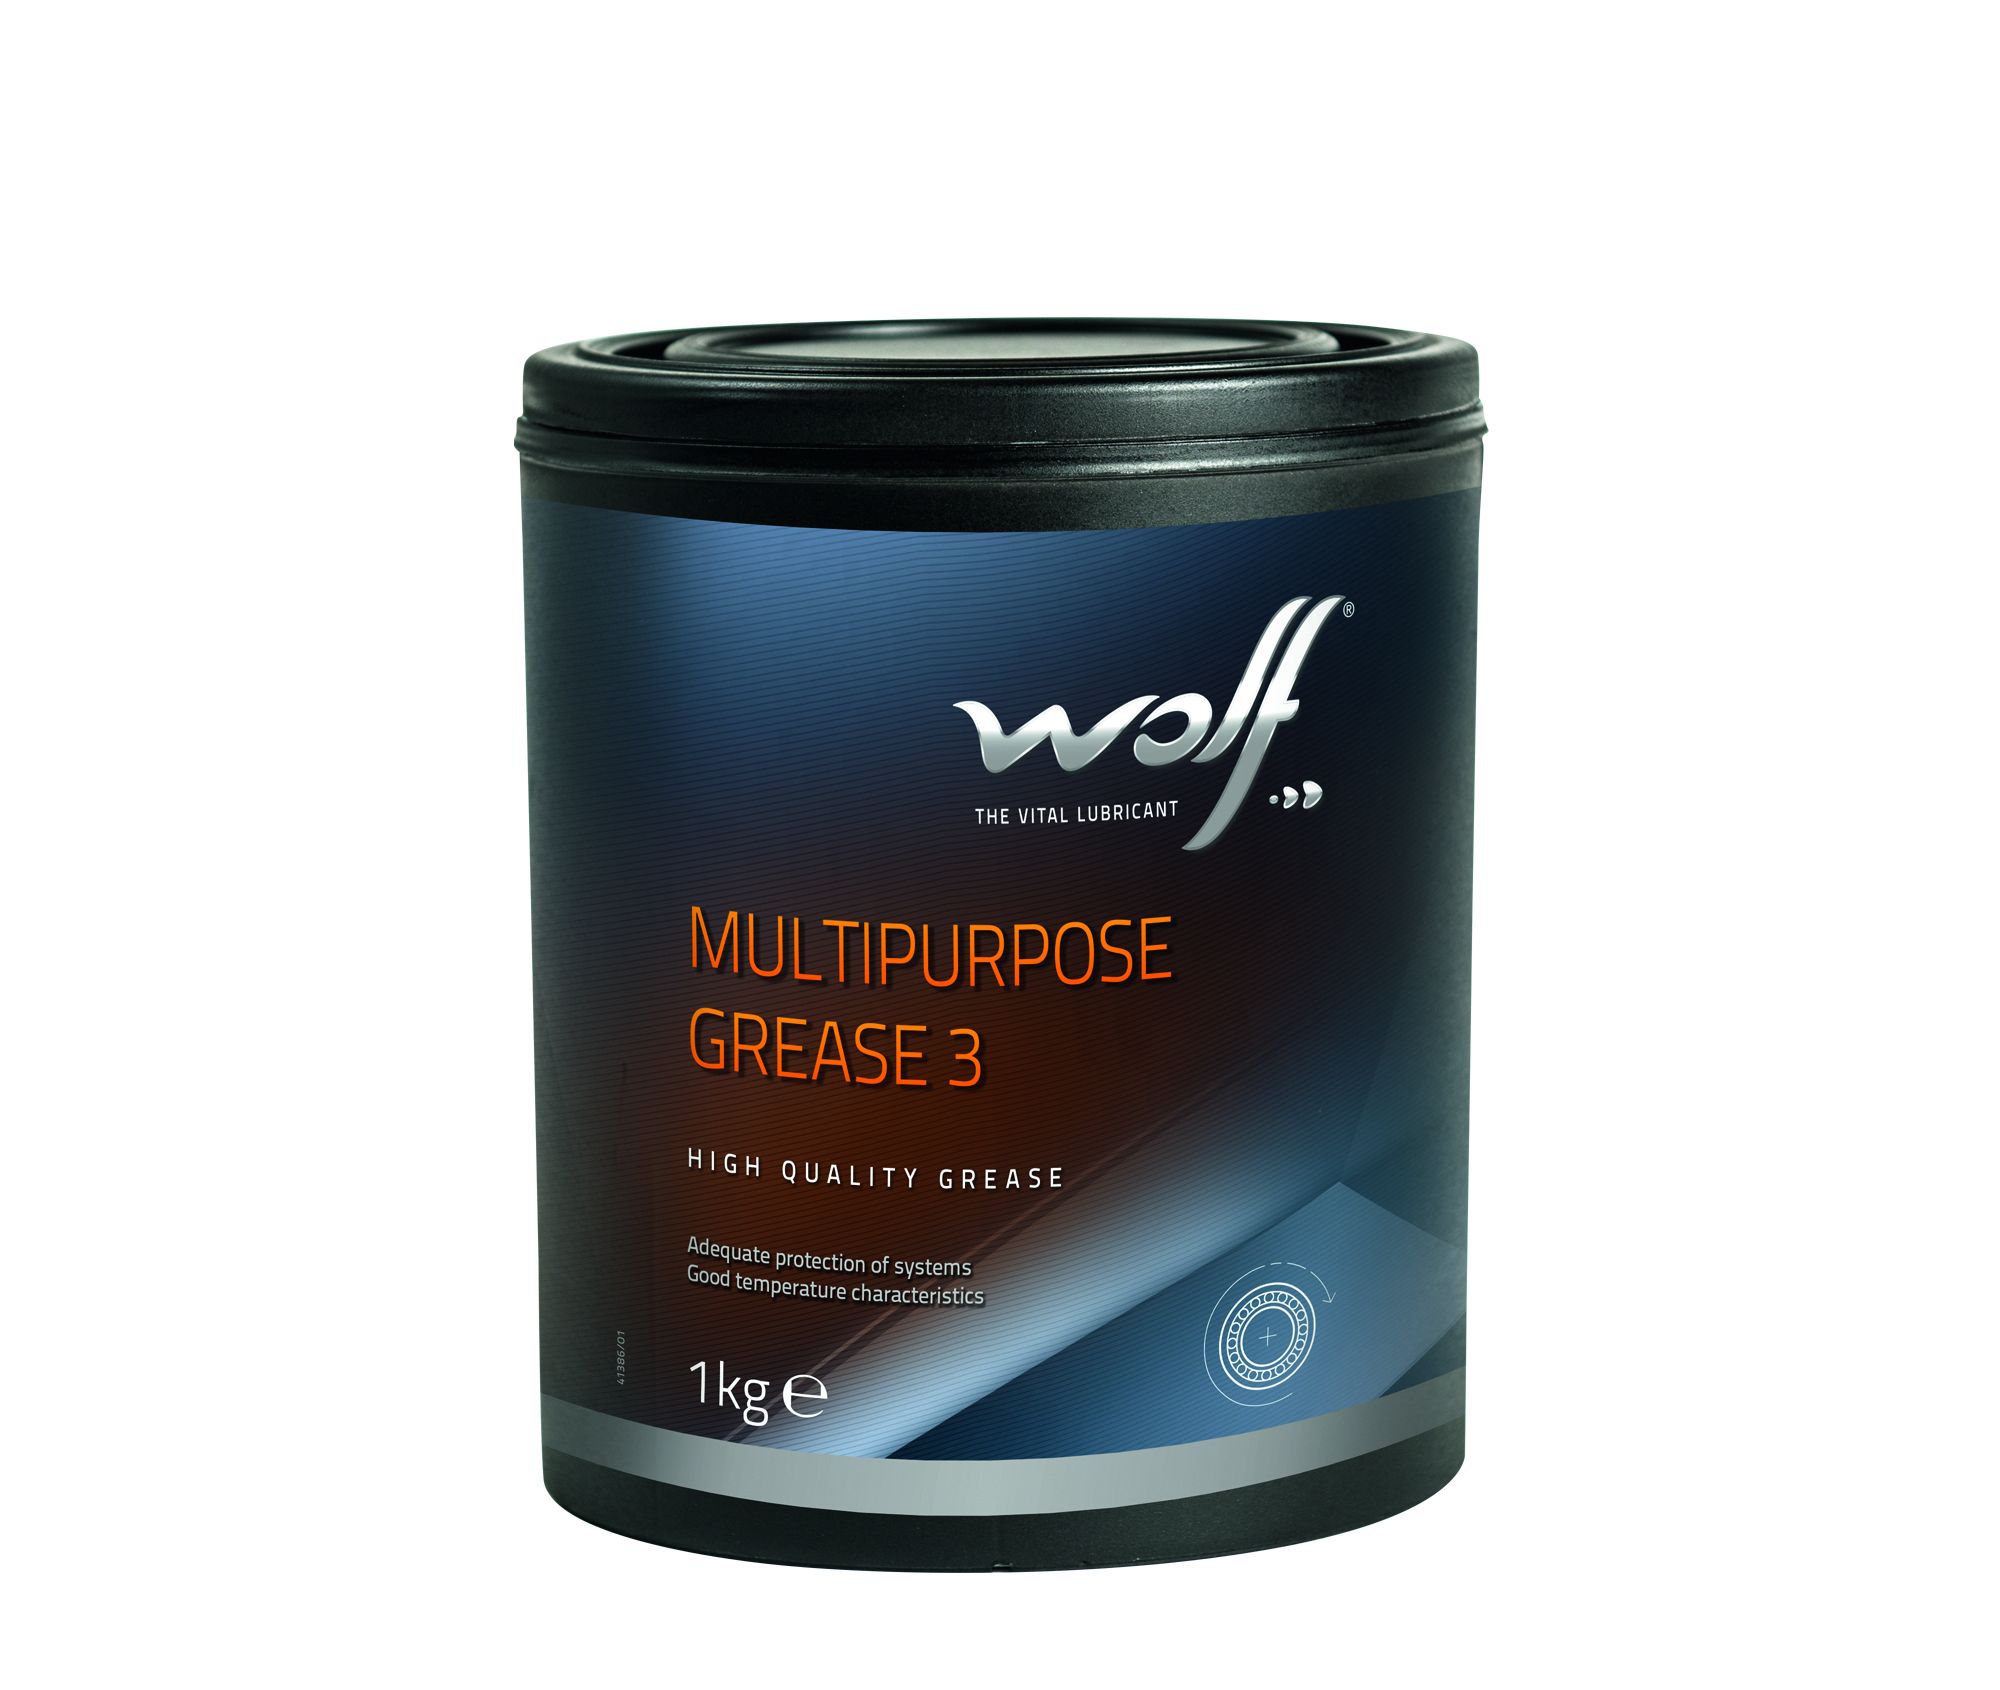 Wolf multipurpose grease 3